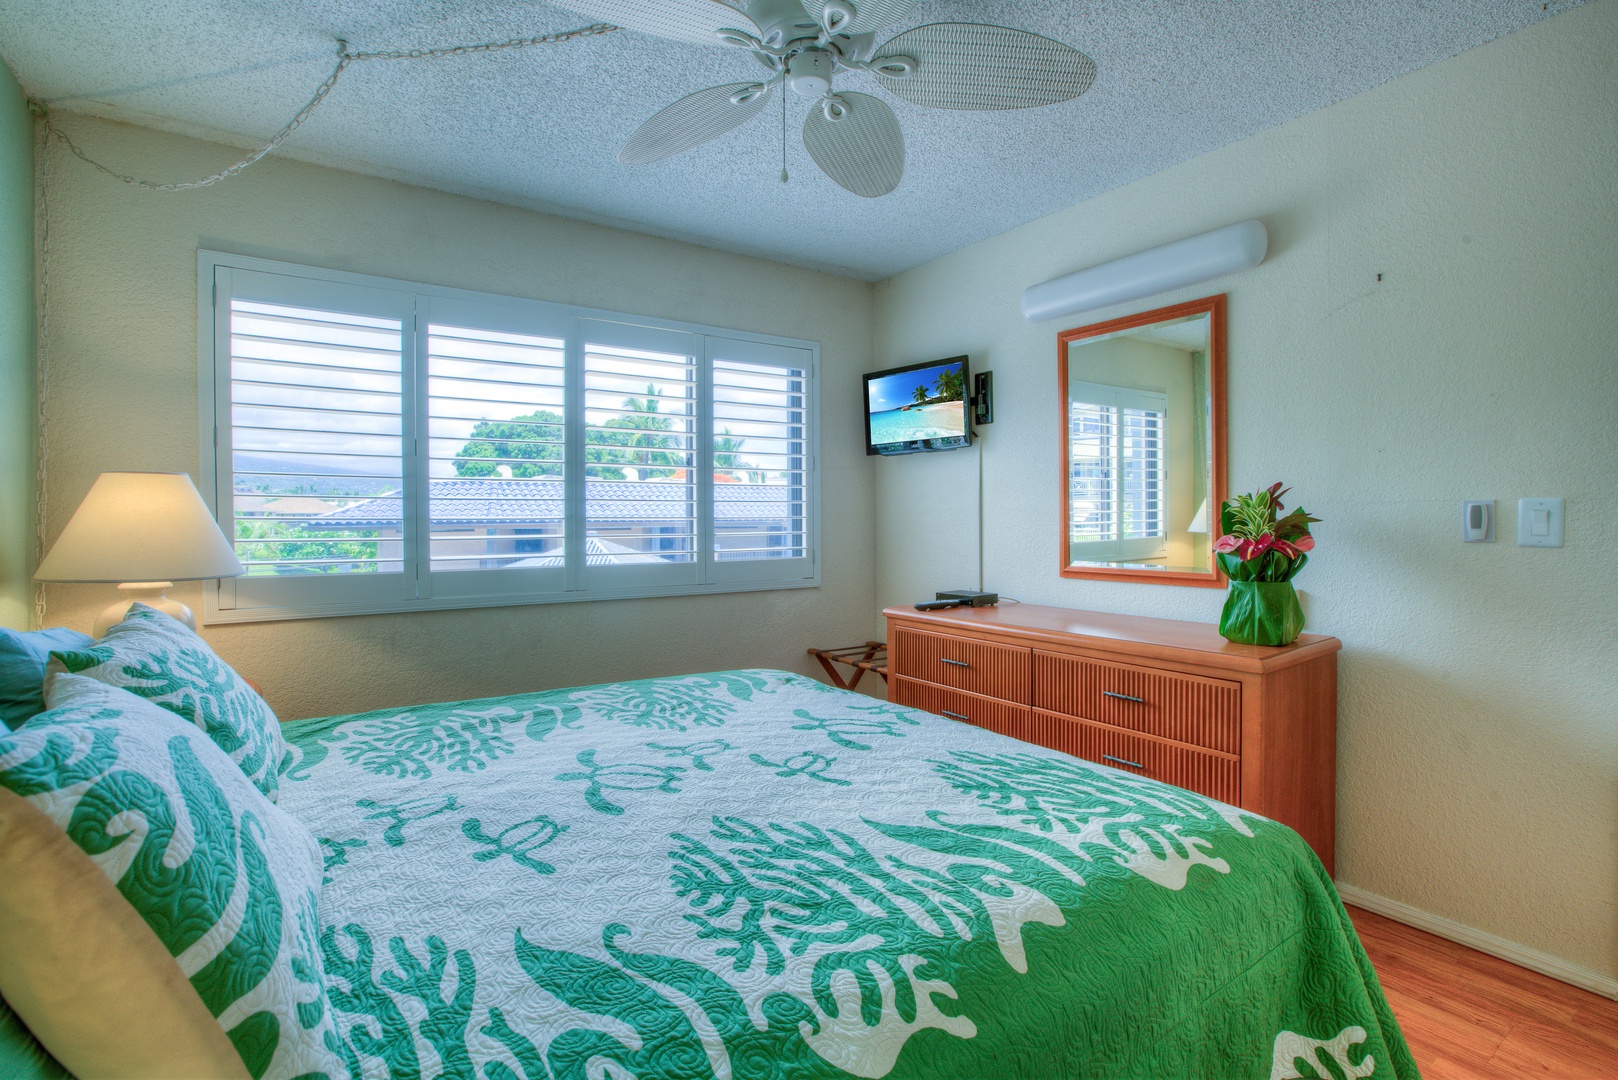 Kailua Kona Vacation Rentals, Kona Reef F11 - Bedroom has Views of Hualalai Mountain through Plantation Shutters.